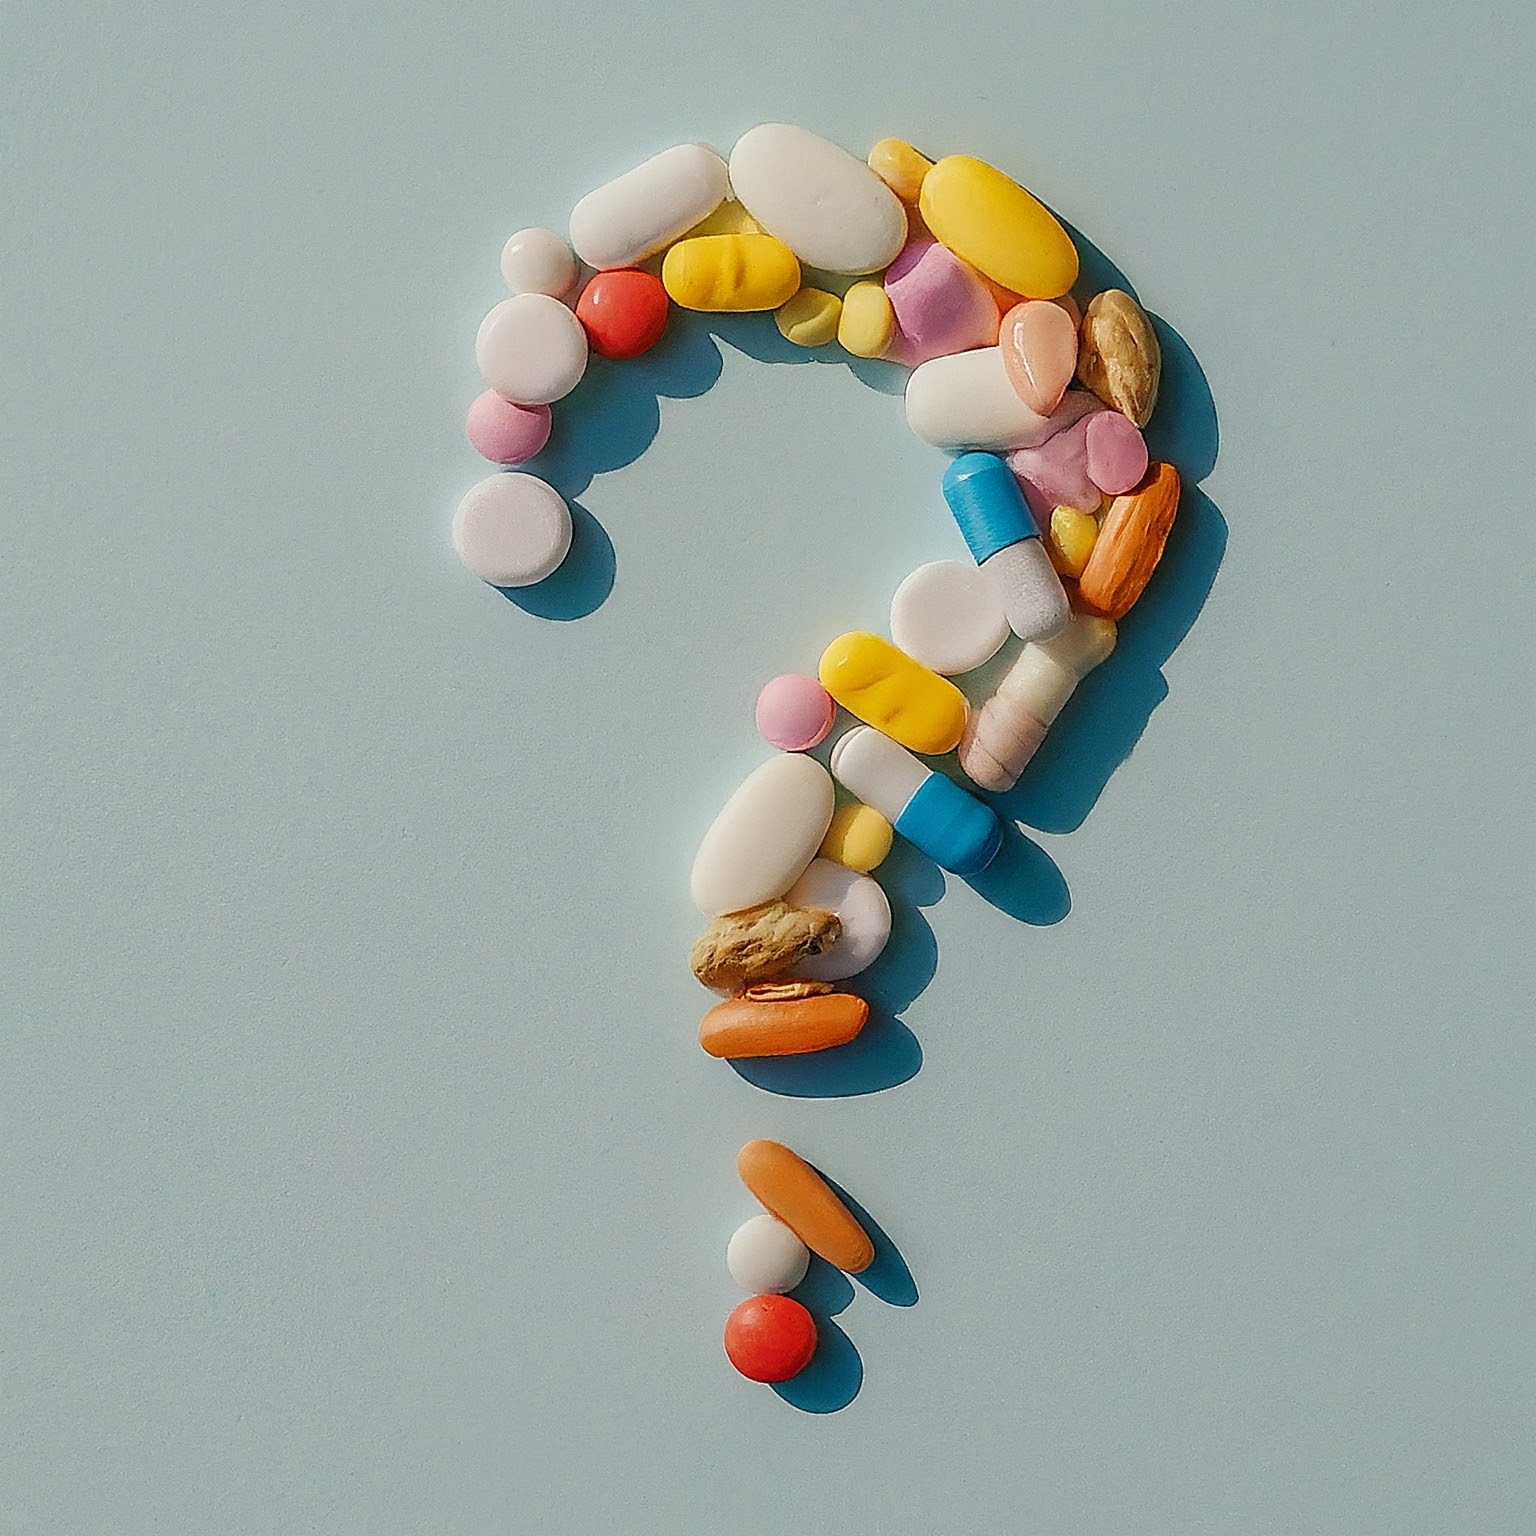 Prescription drugs in the shape of a question mark